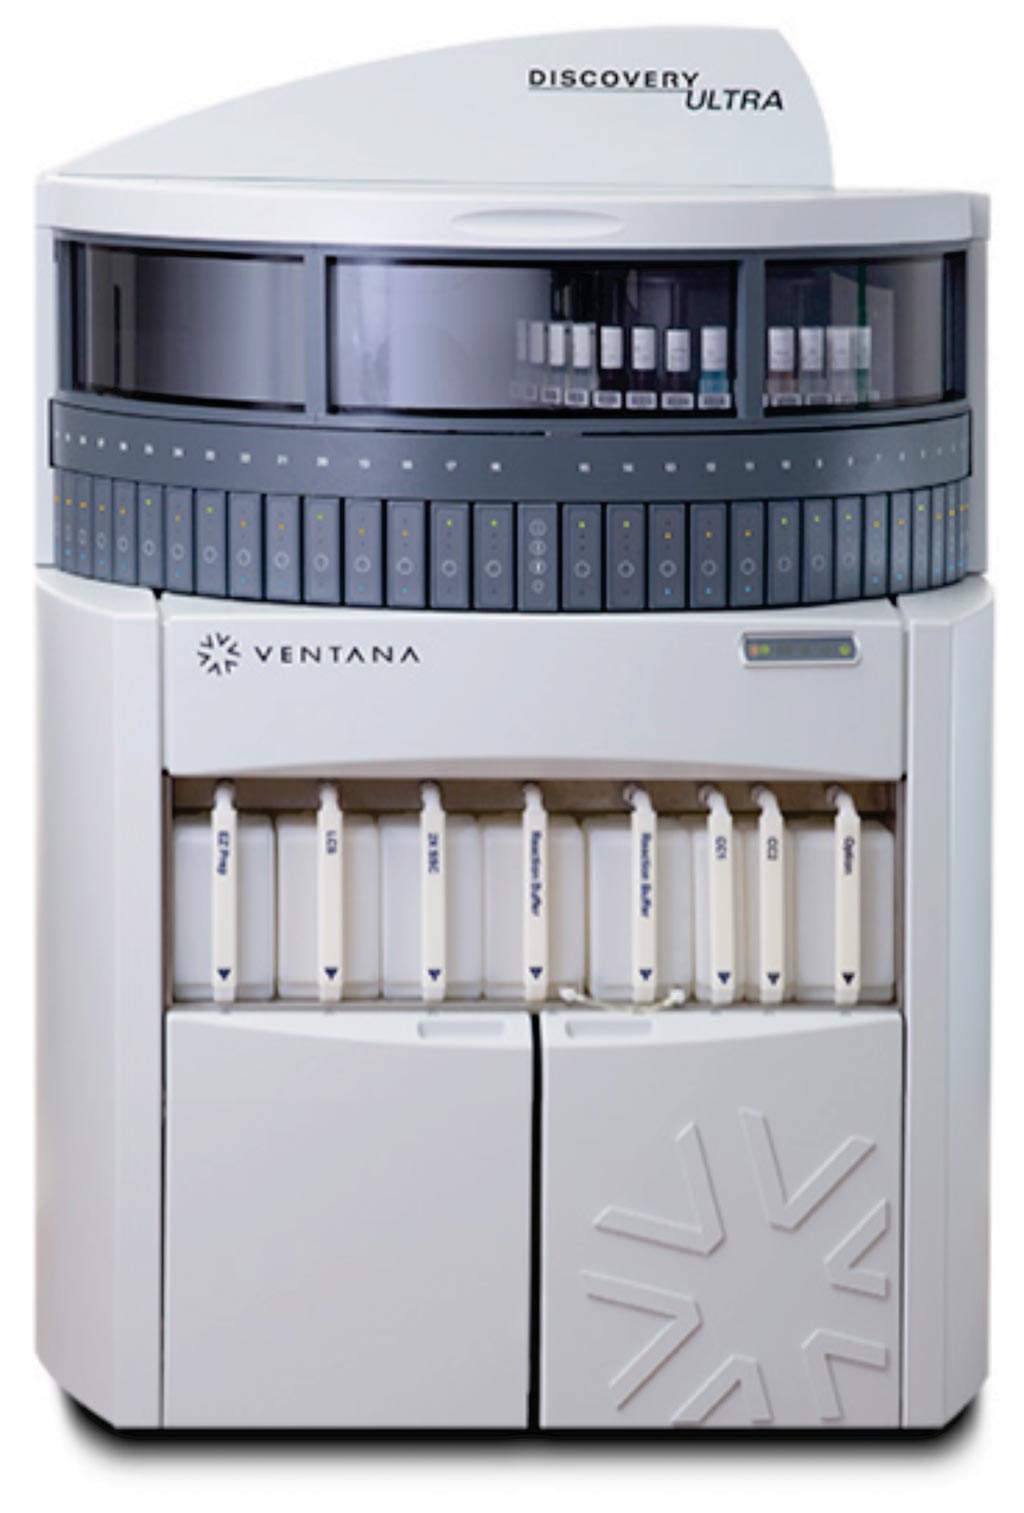 Image: The Ventana Discovery ultra biomarker platform stainer (Photo courtesy of Roche Diagnostics).